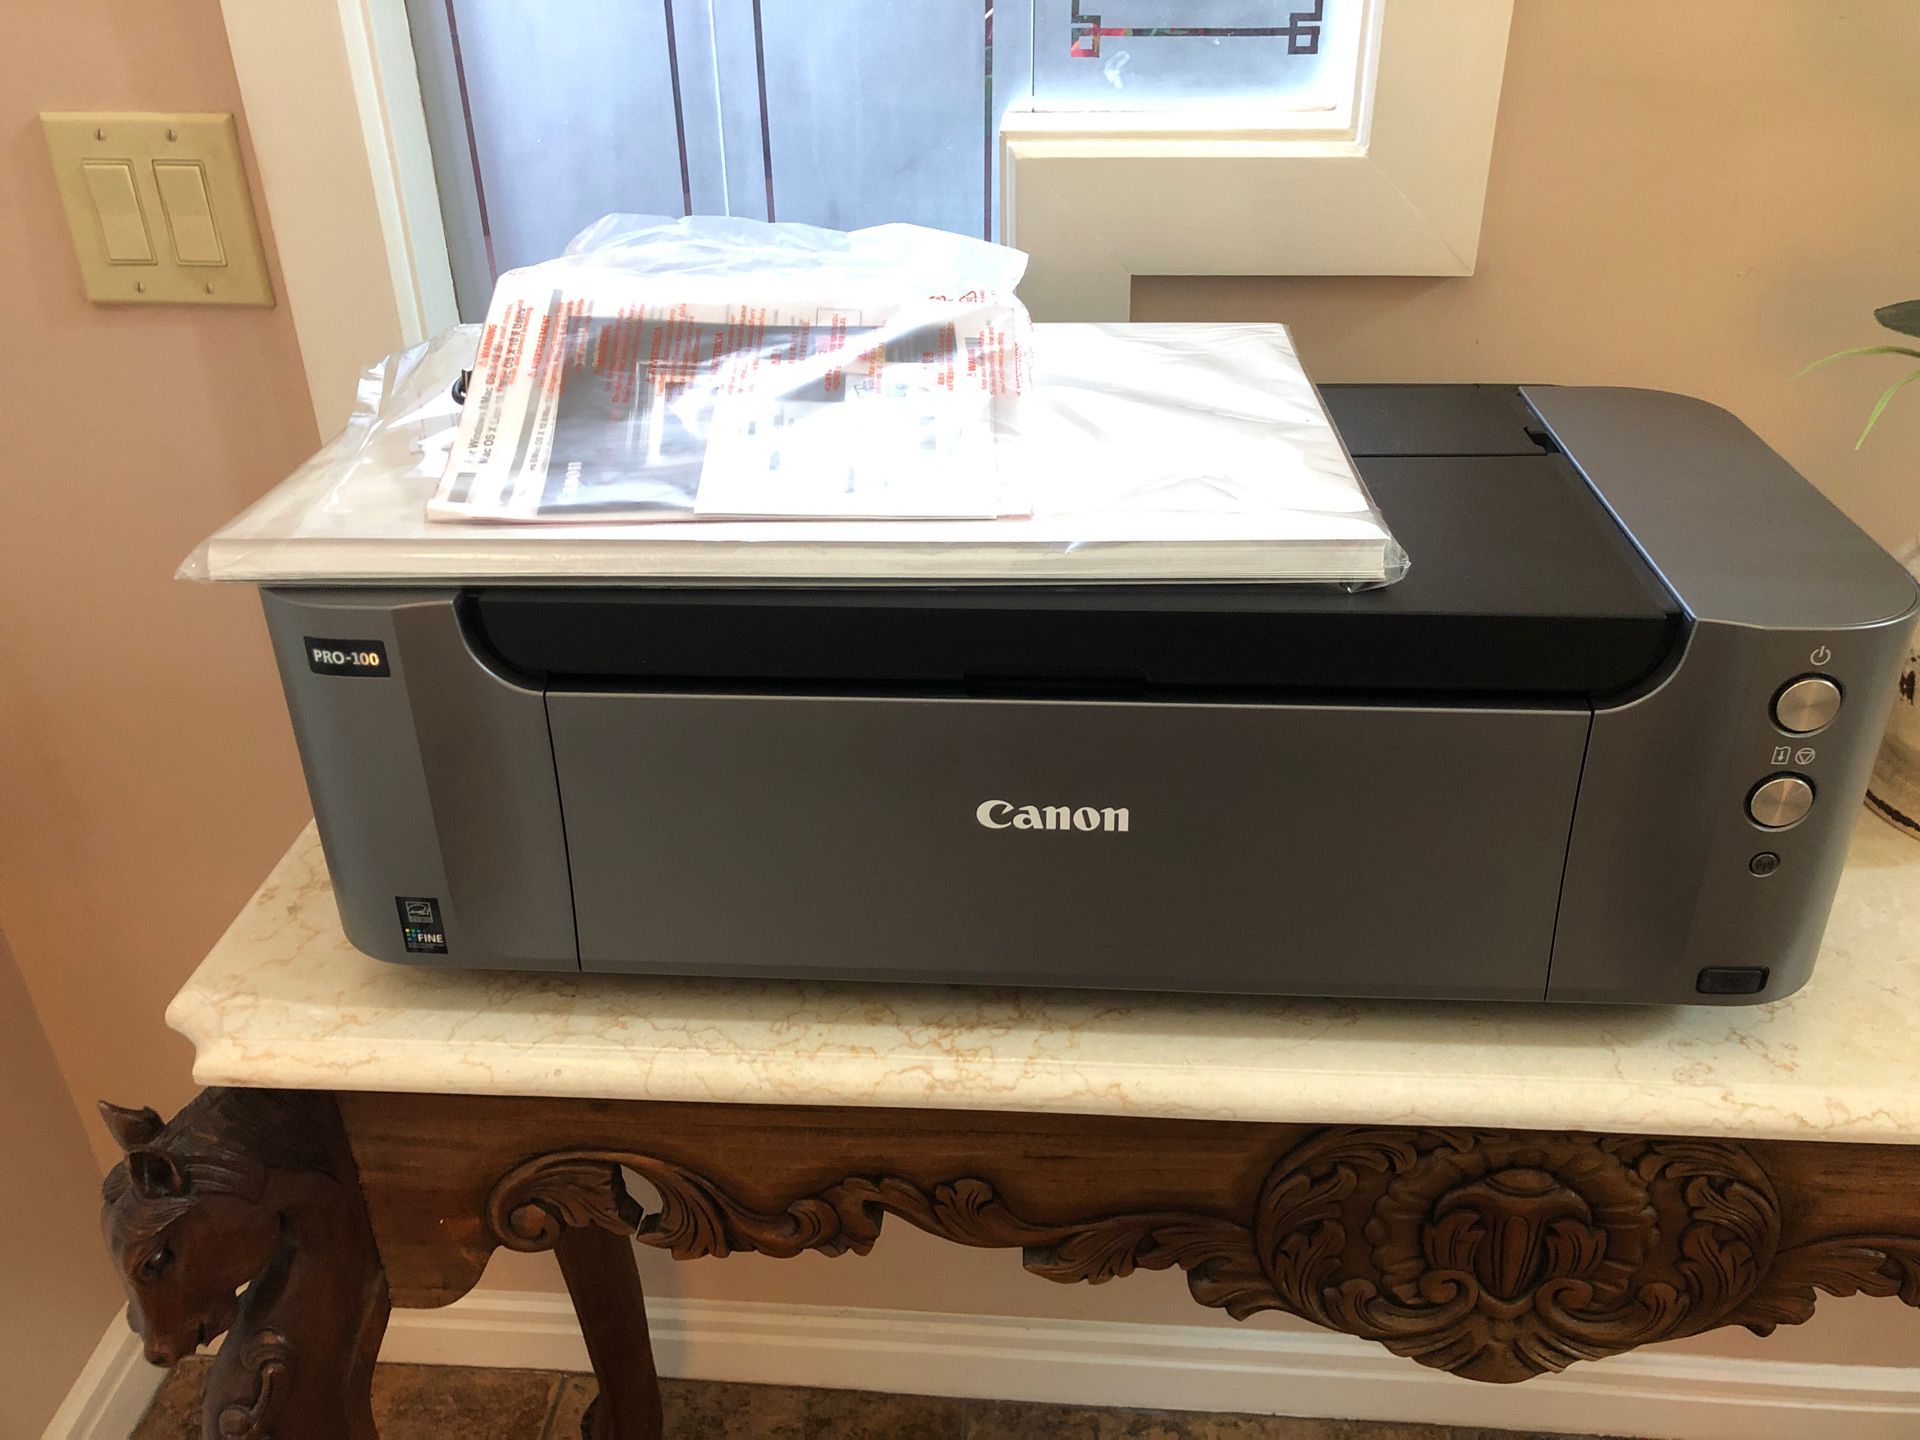 Canon Pixma Pro-100 photo printer with supplies